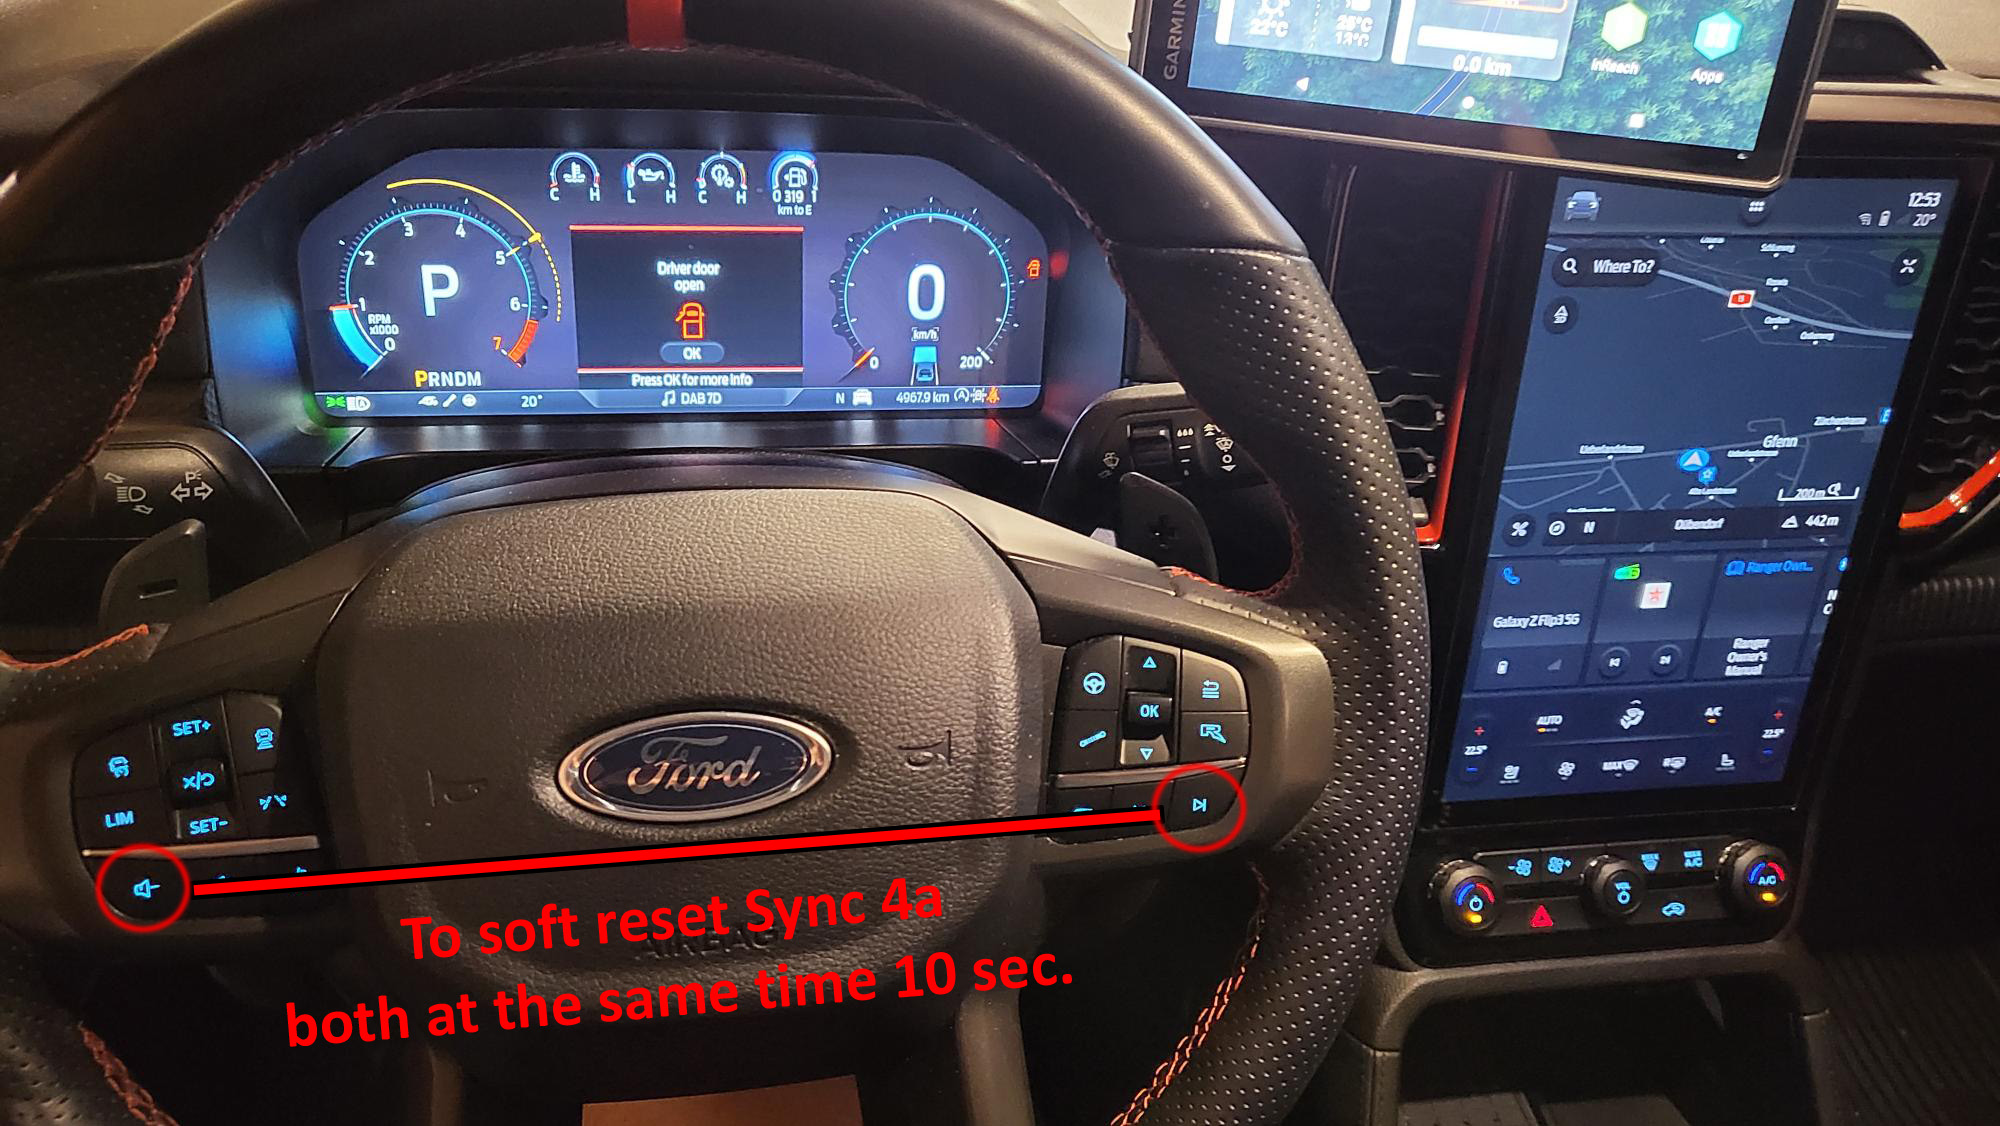 Ford Ranger Sync 12" Screen Freezing up. - Fixing in Progress New_Gen_Ranger_Raptor_softreset_Sync4a 